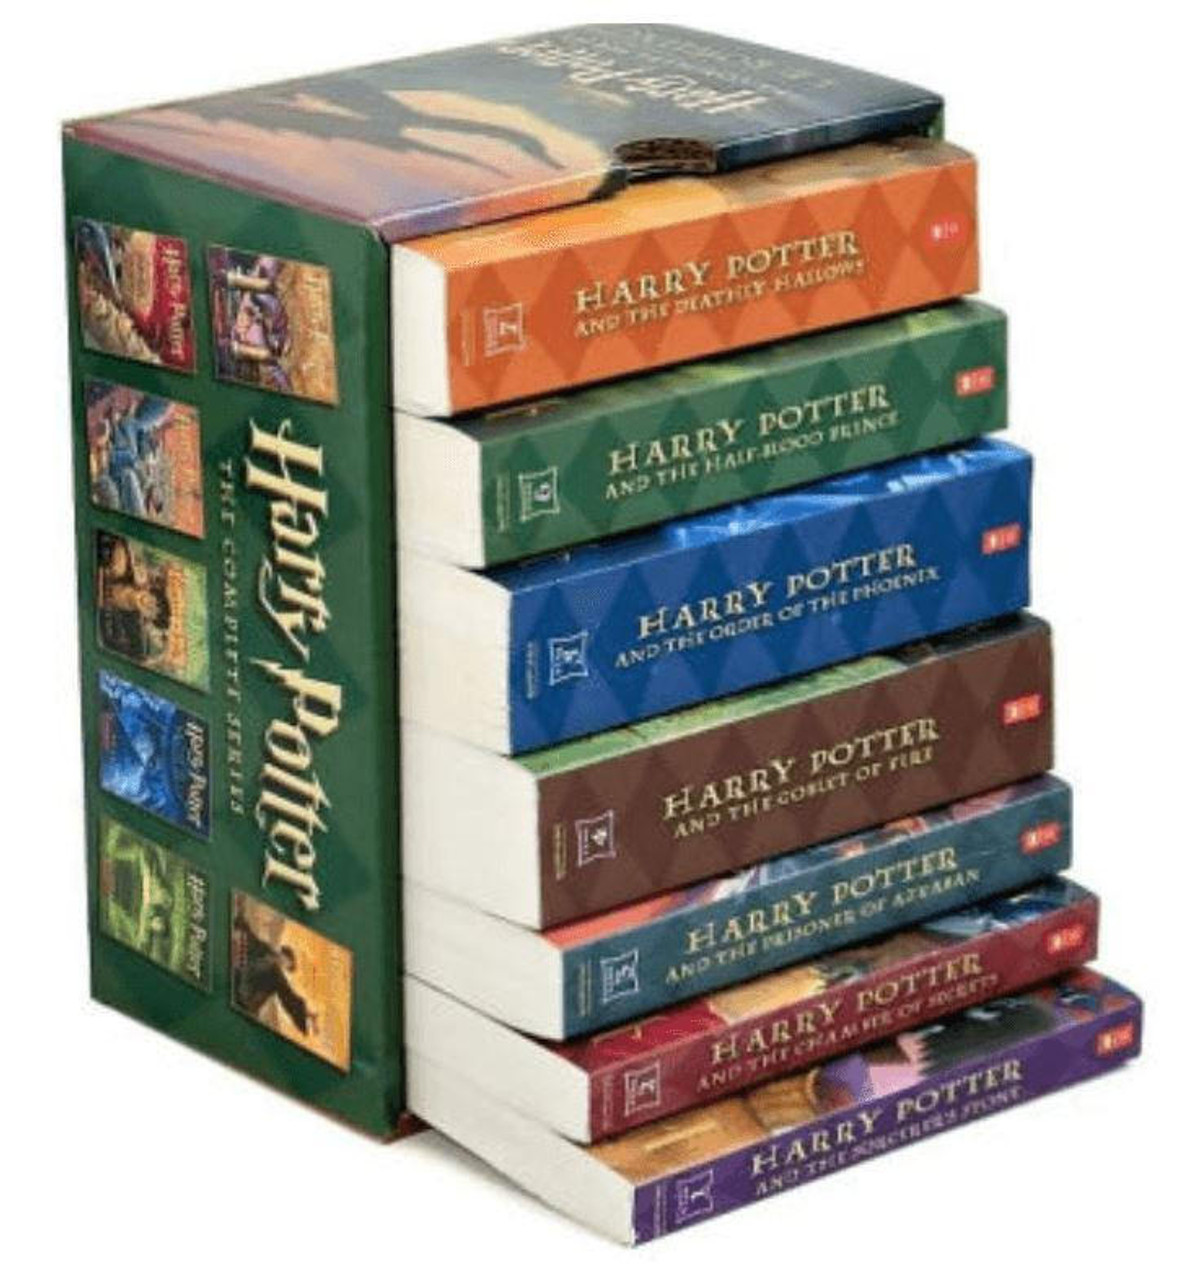 Harry Potter Mini Books complete set of 7